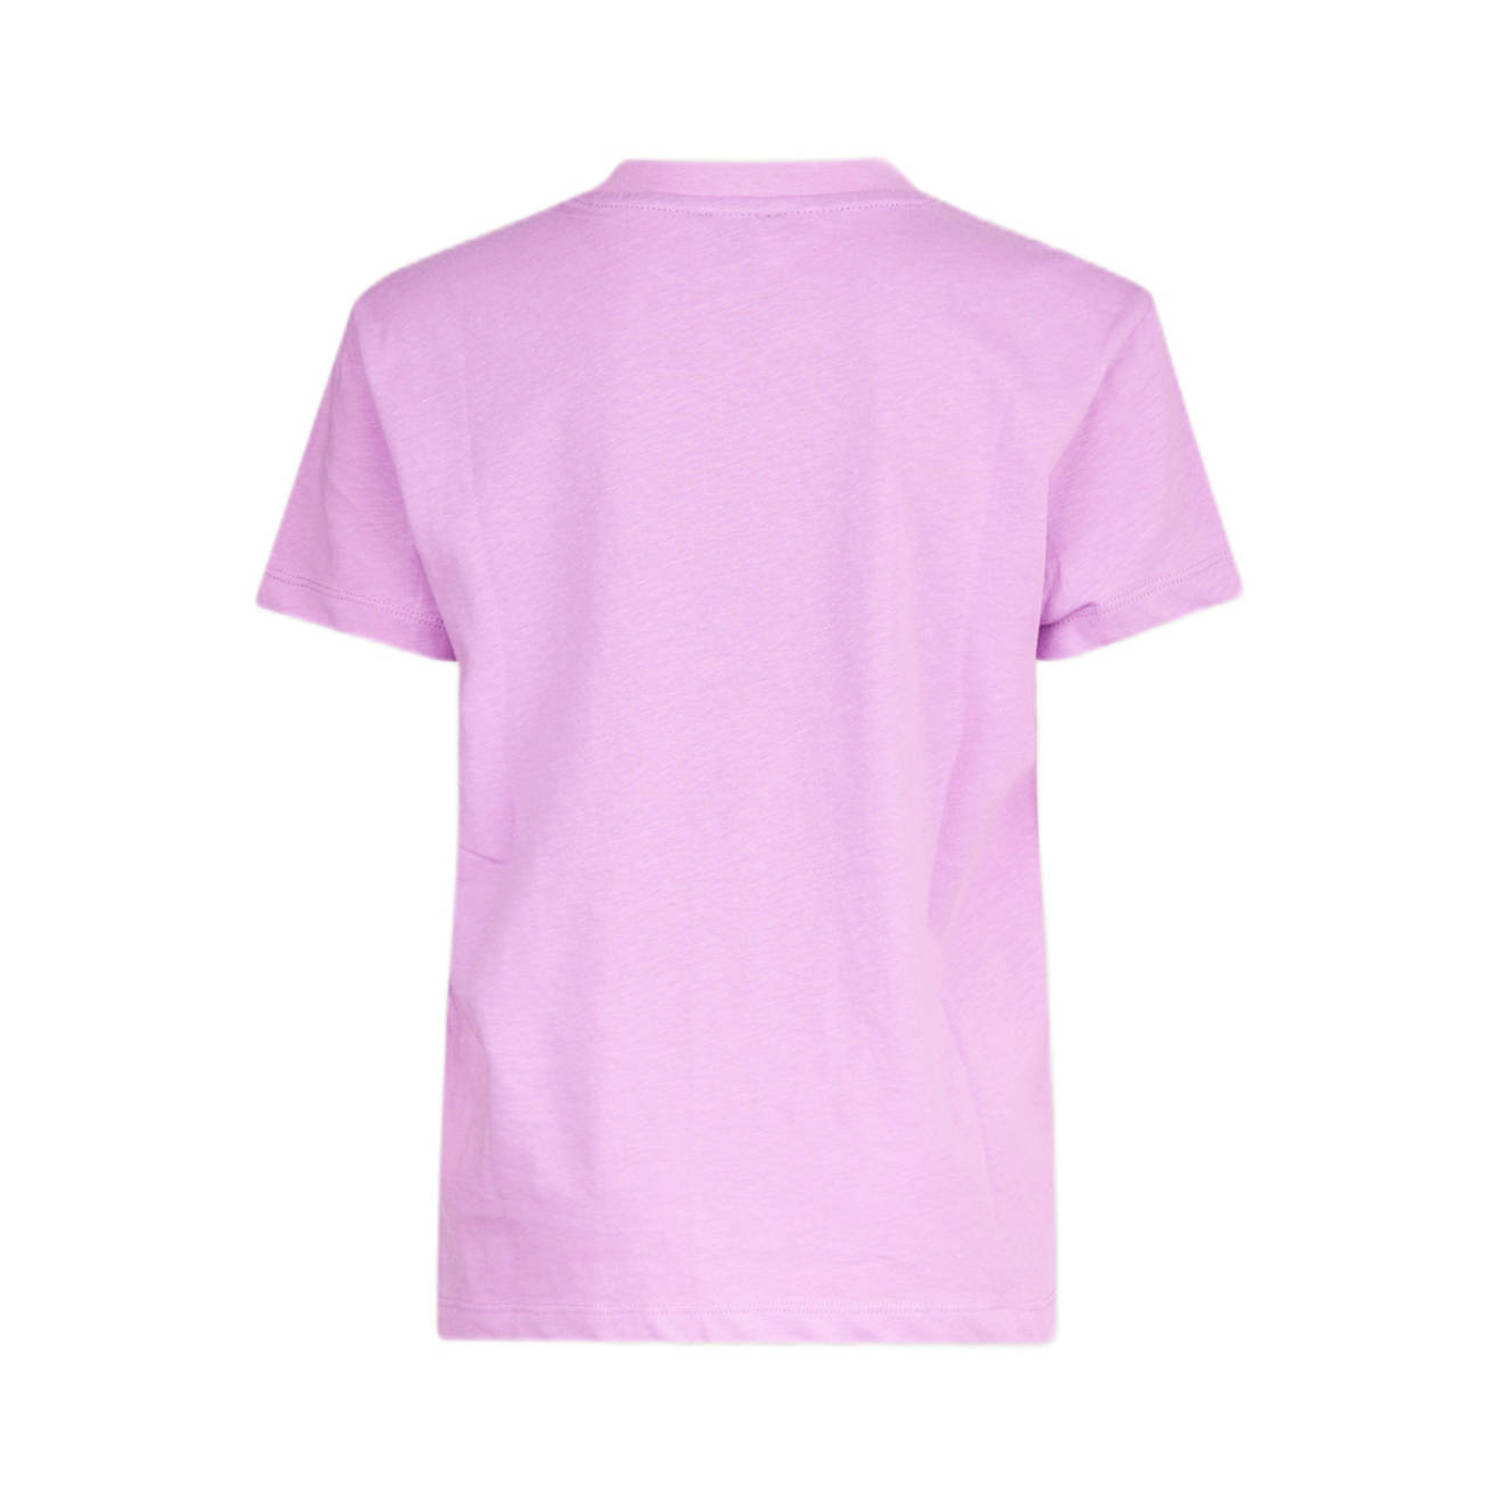 Shoeby T-shirt met printopdruk paars